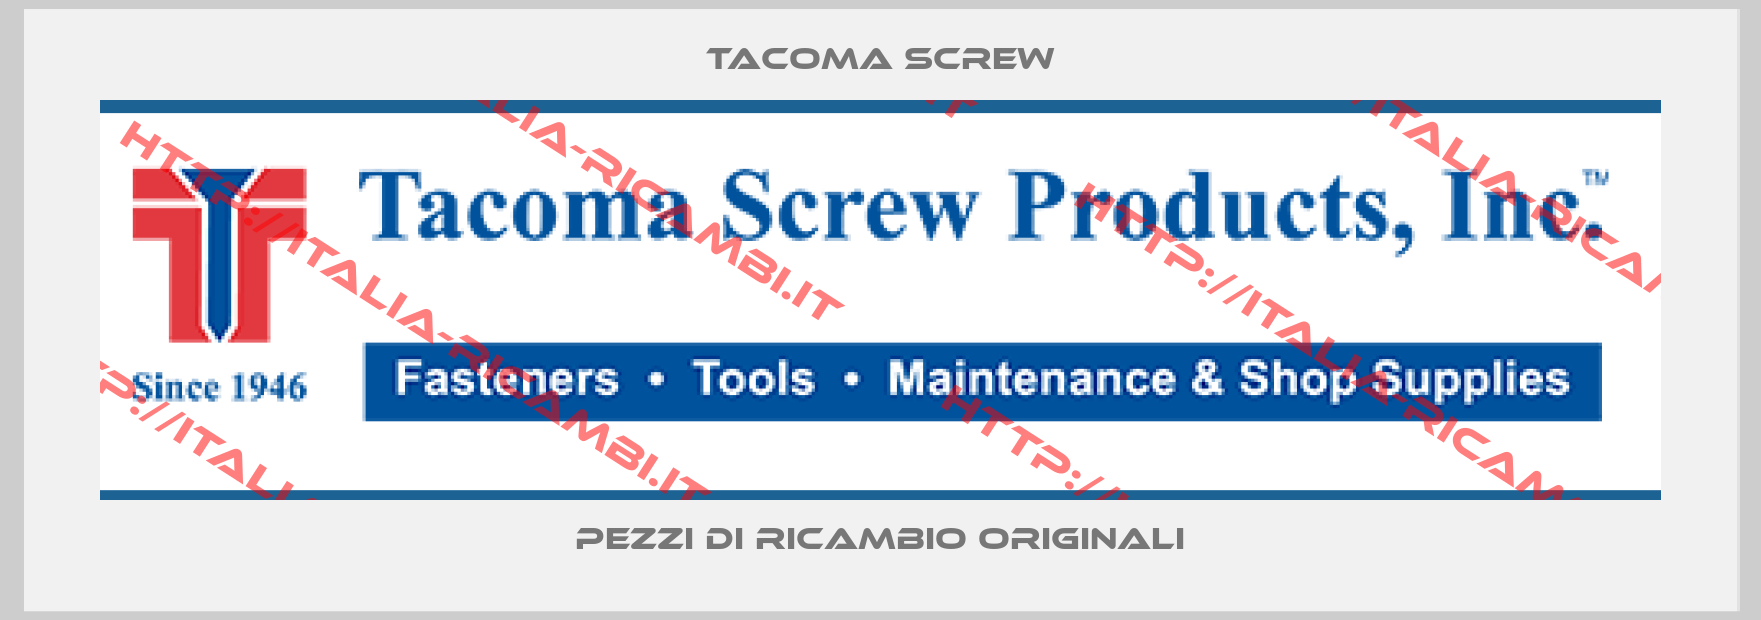 Tacoma Screw